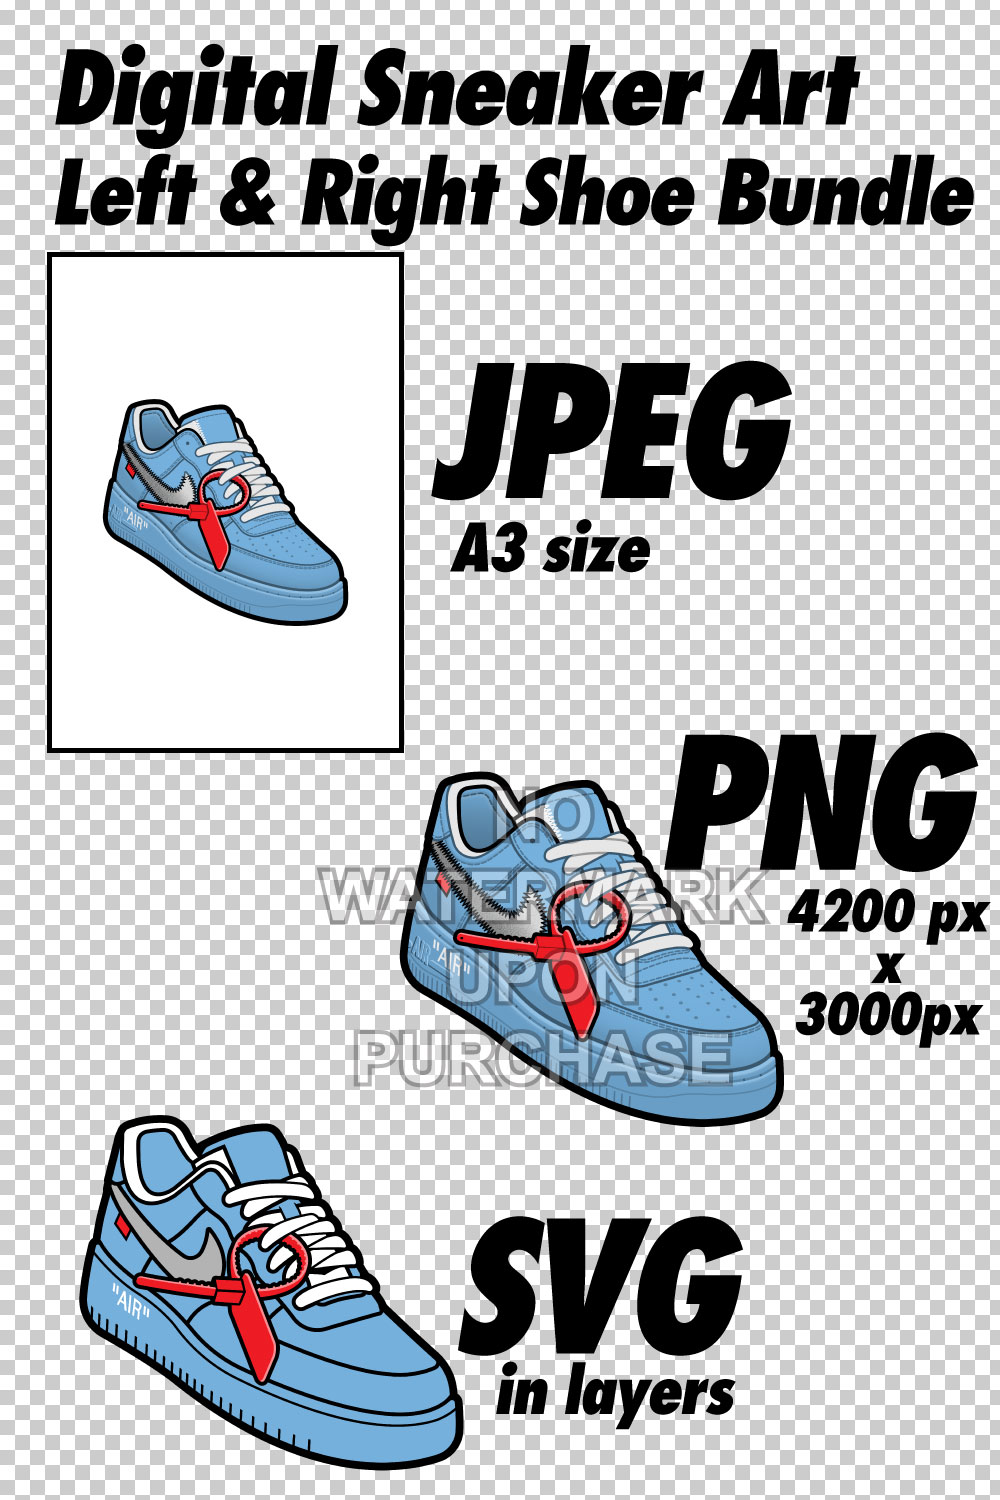 Air Force 1 Off White MCA University Blue Left & Right shoe bundle JPEG PNG SVG digital download pinterest preview image.